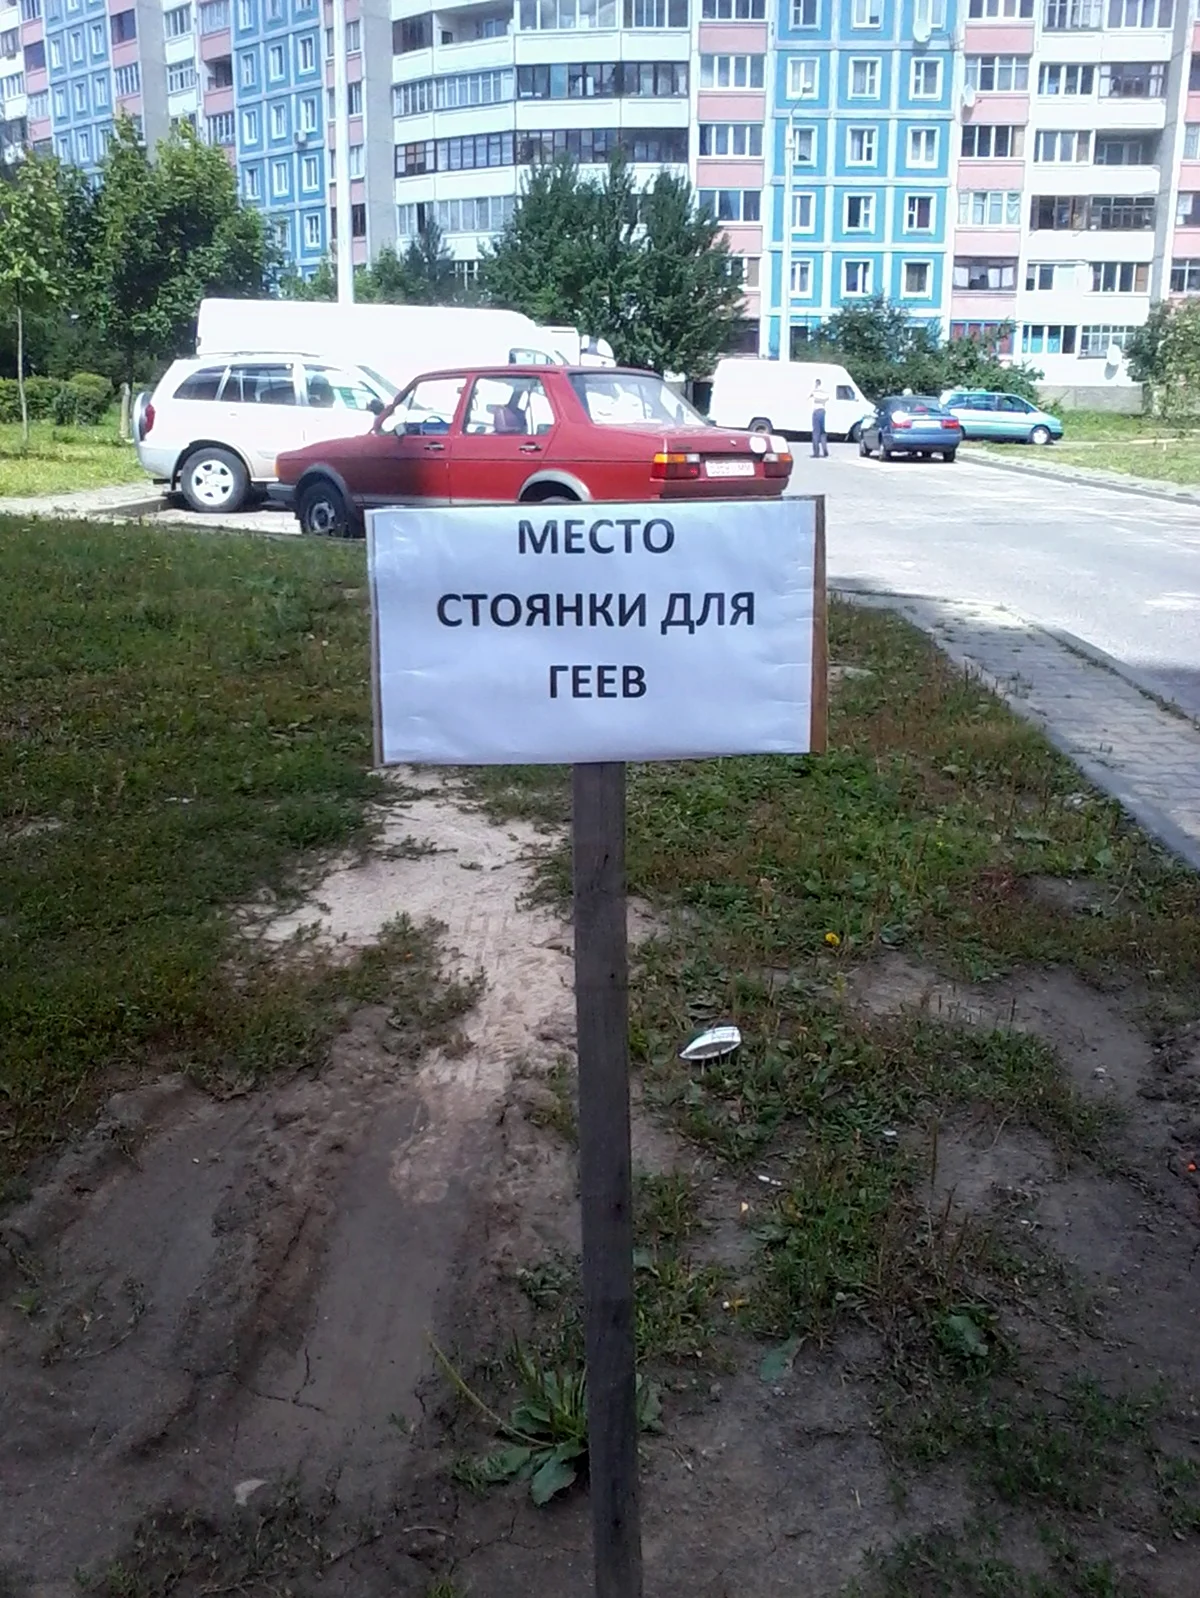 Парковка на газоне запрещена. Прикольная картинка